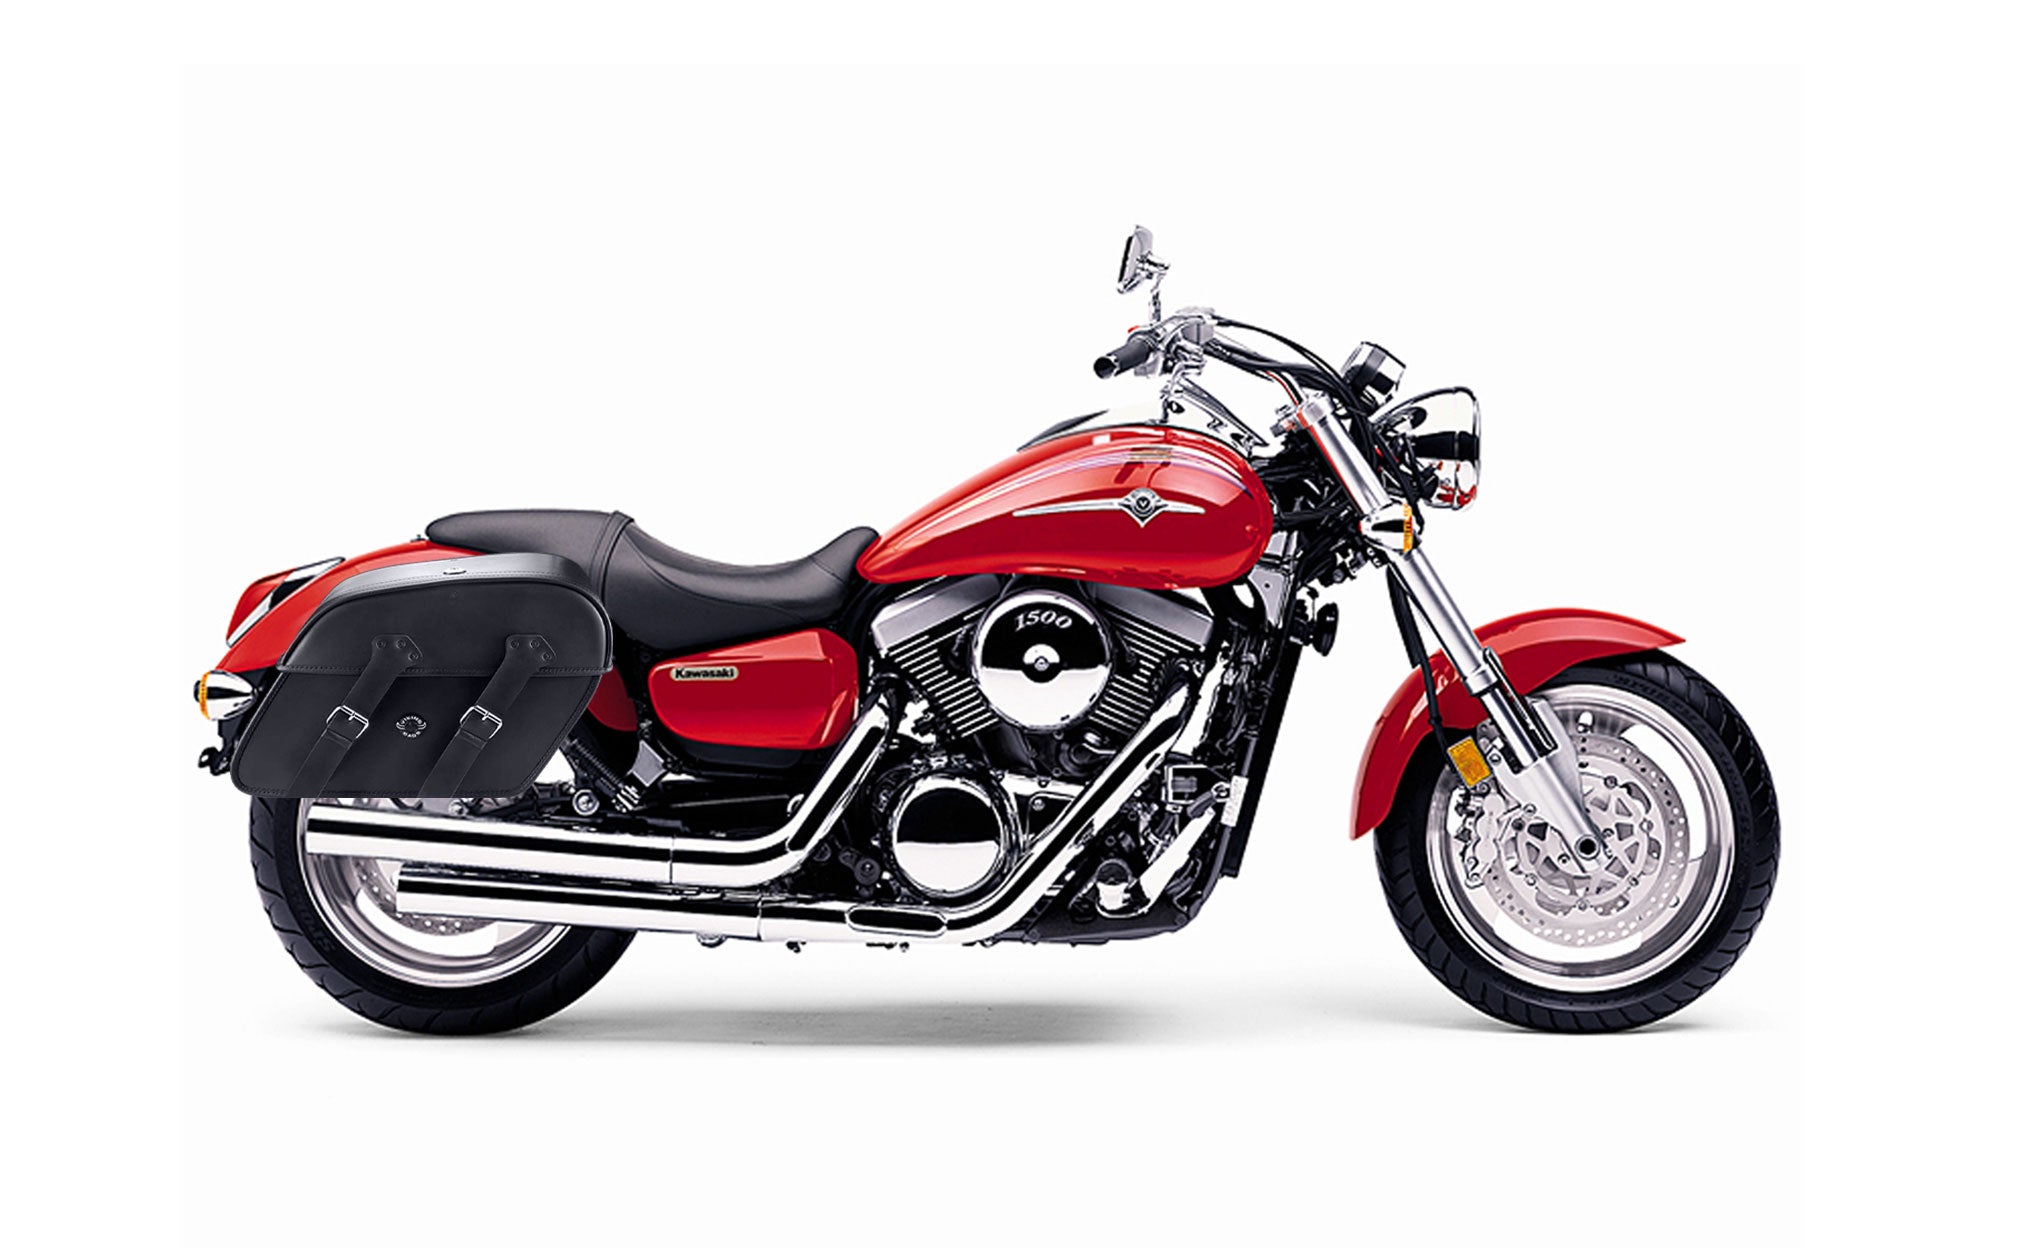 Viking Raven Extra Large Kawasaki Mean Streak 1500 Shock Cut Out Leather Motorcycle Saddlebags on Bike Photo @expand